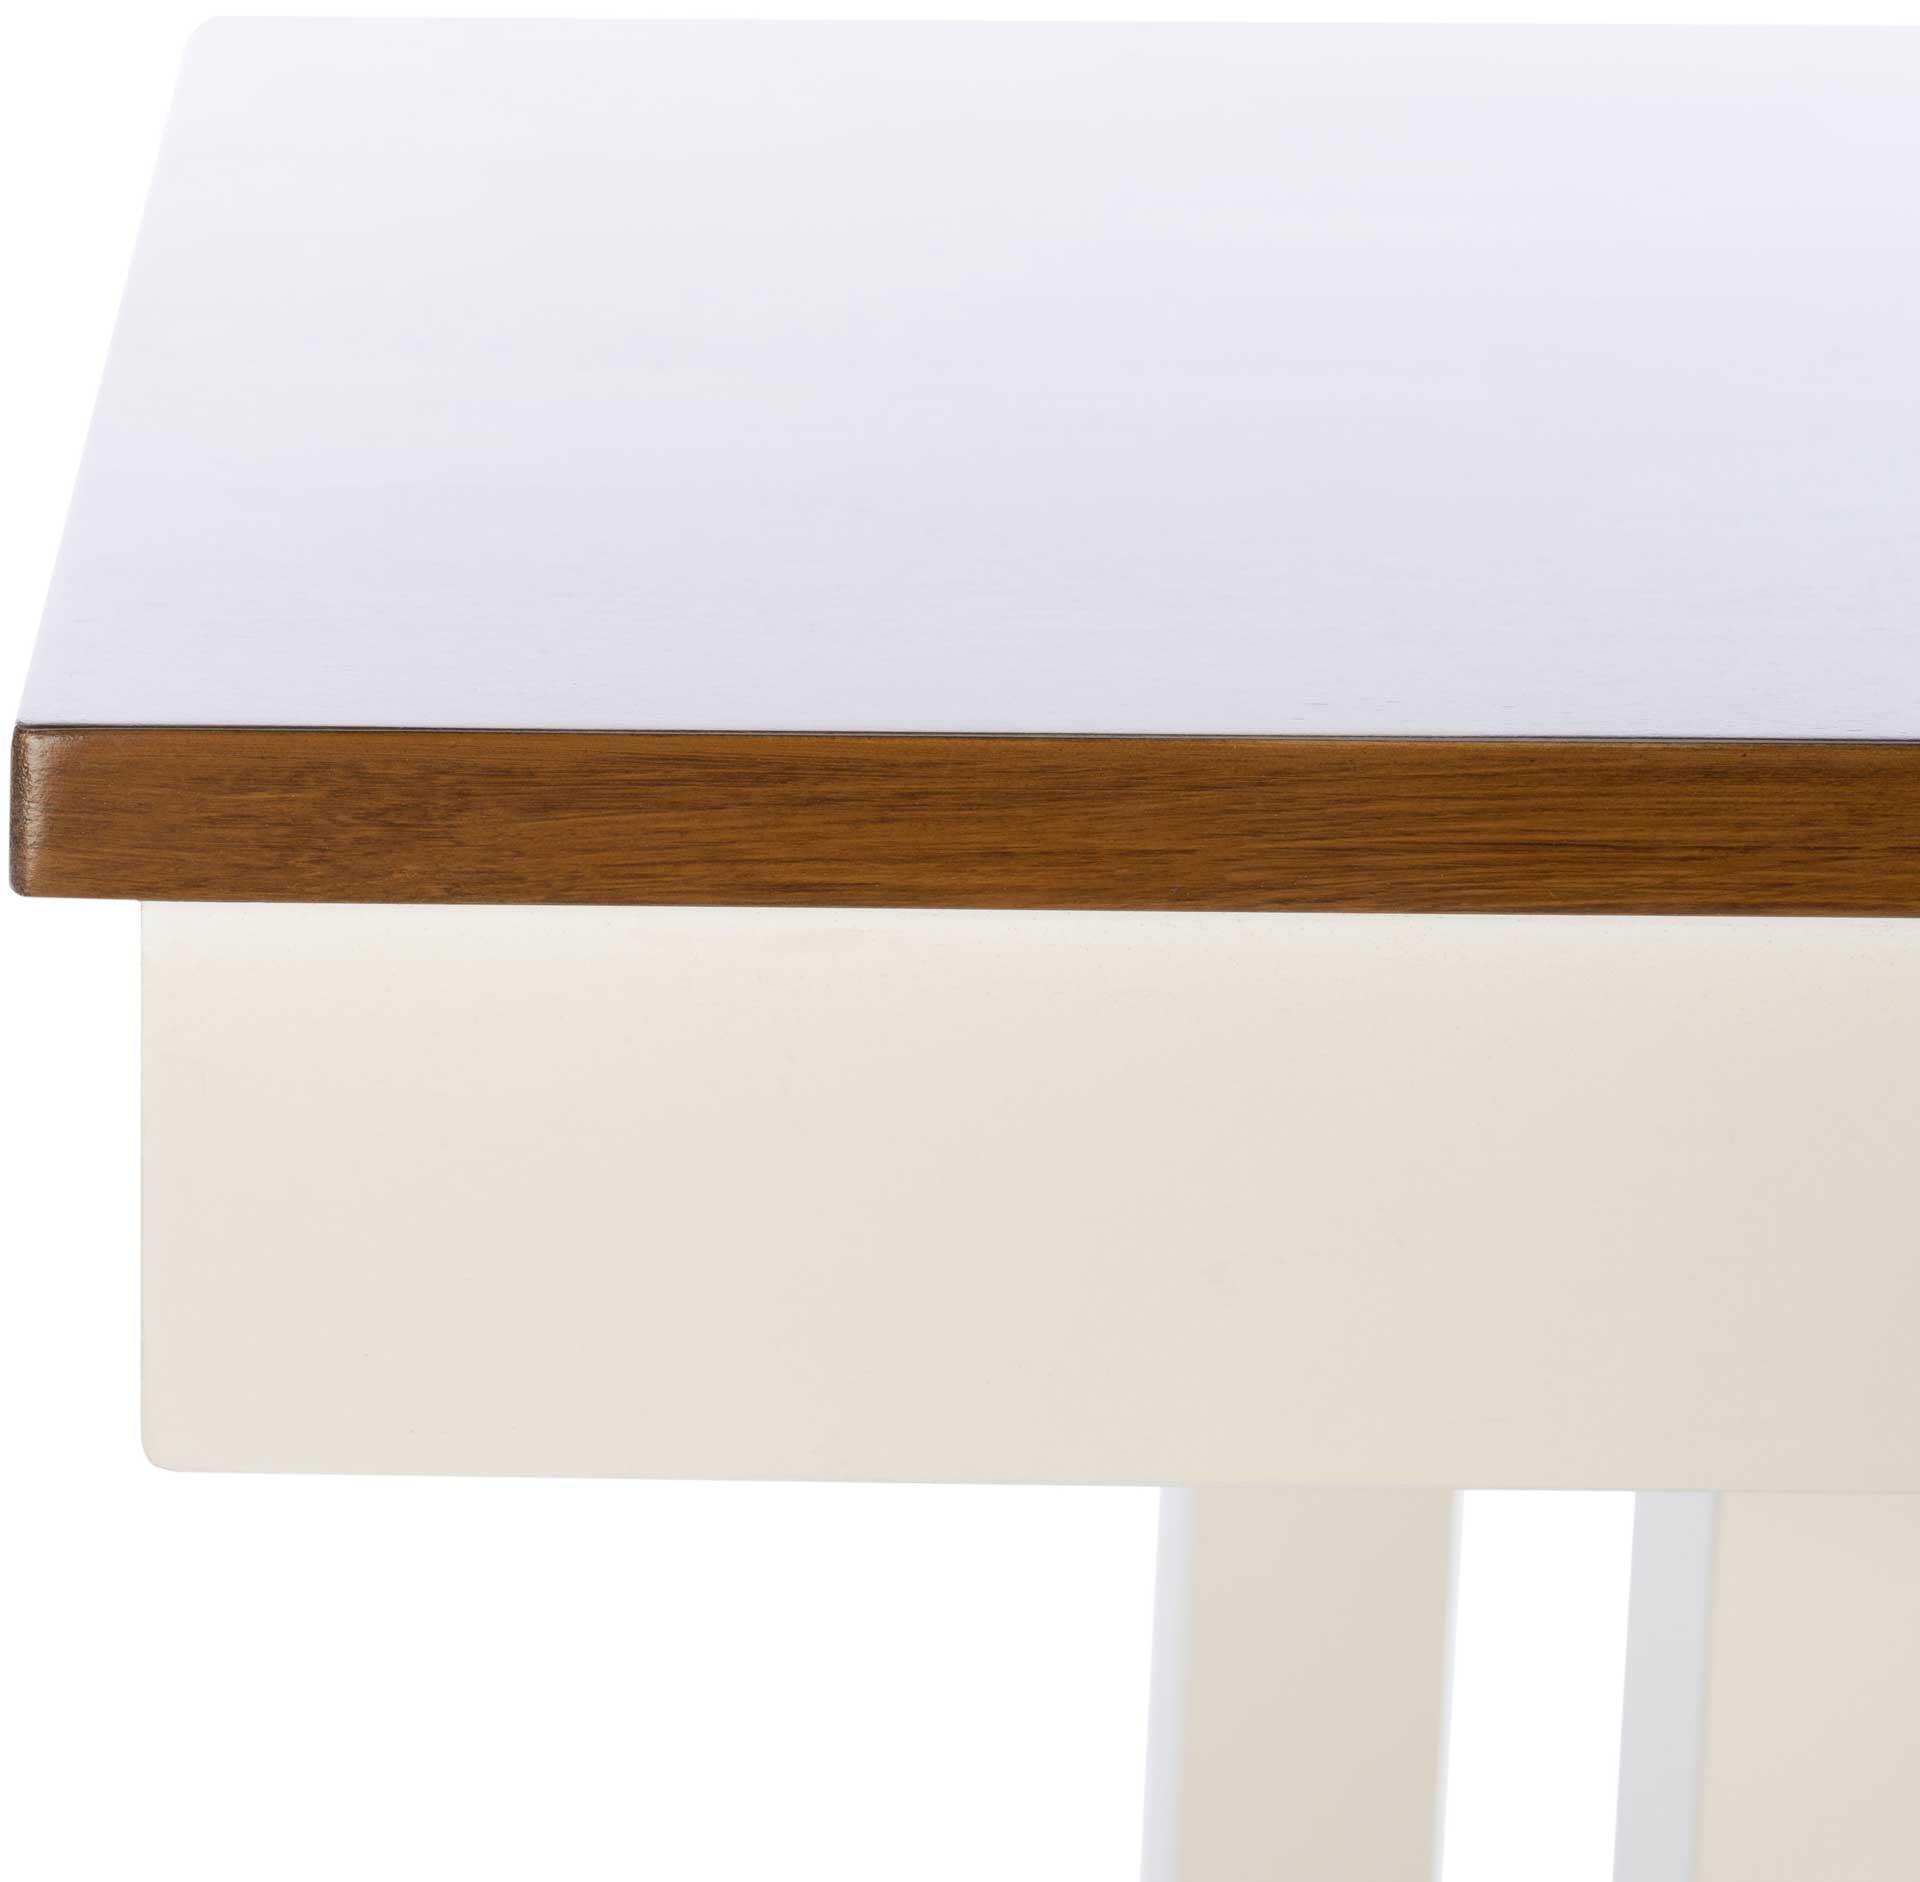 Yuki Square Counter Table White/Natural